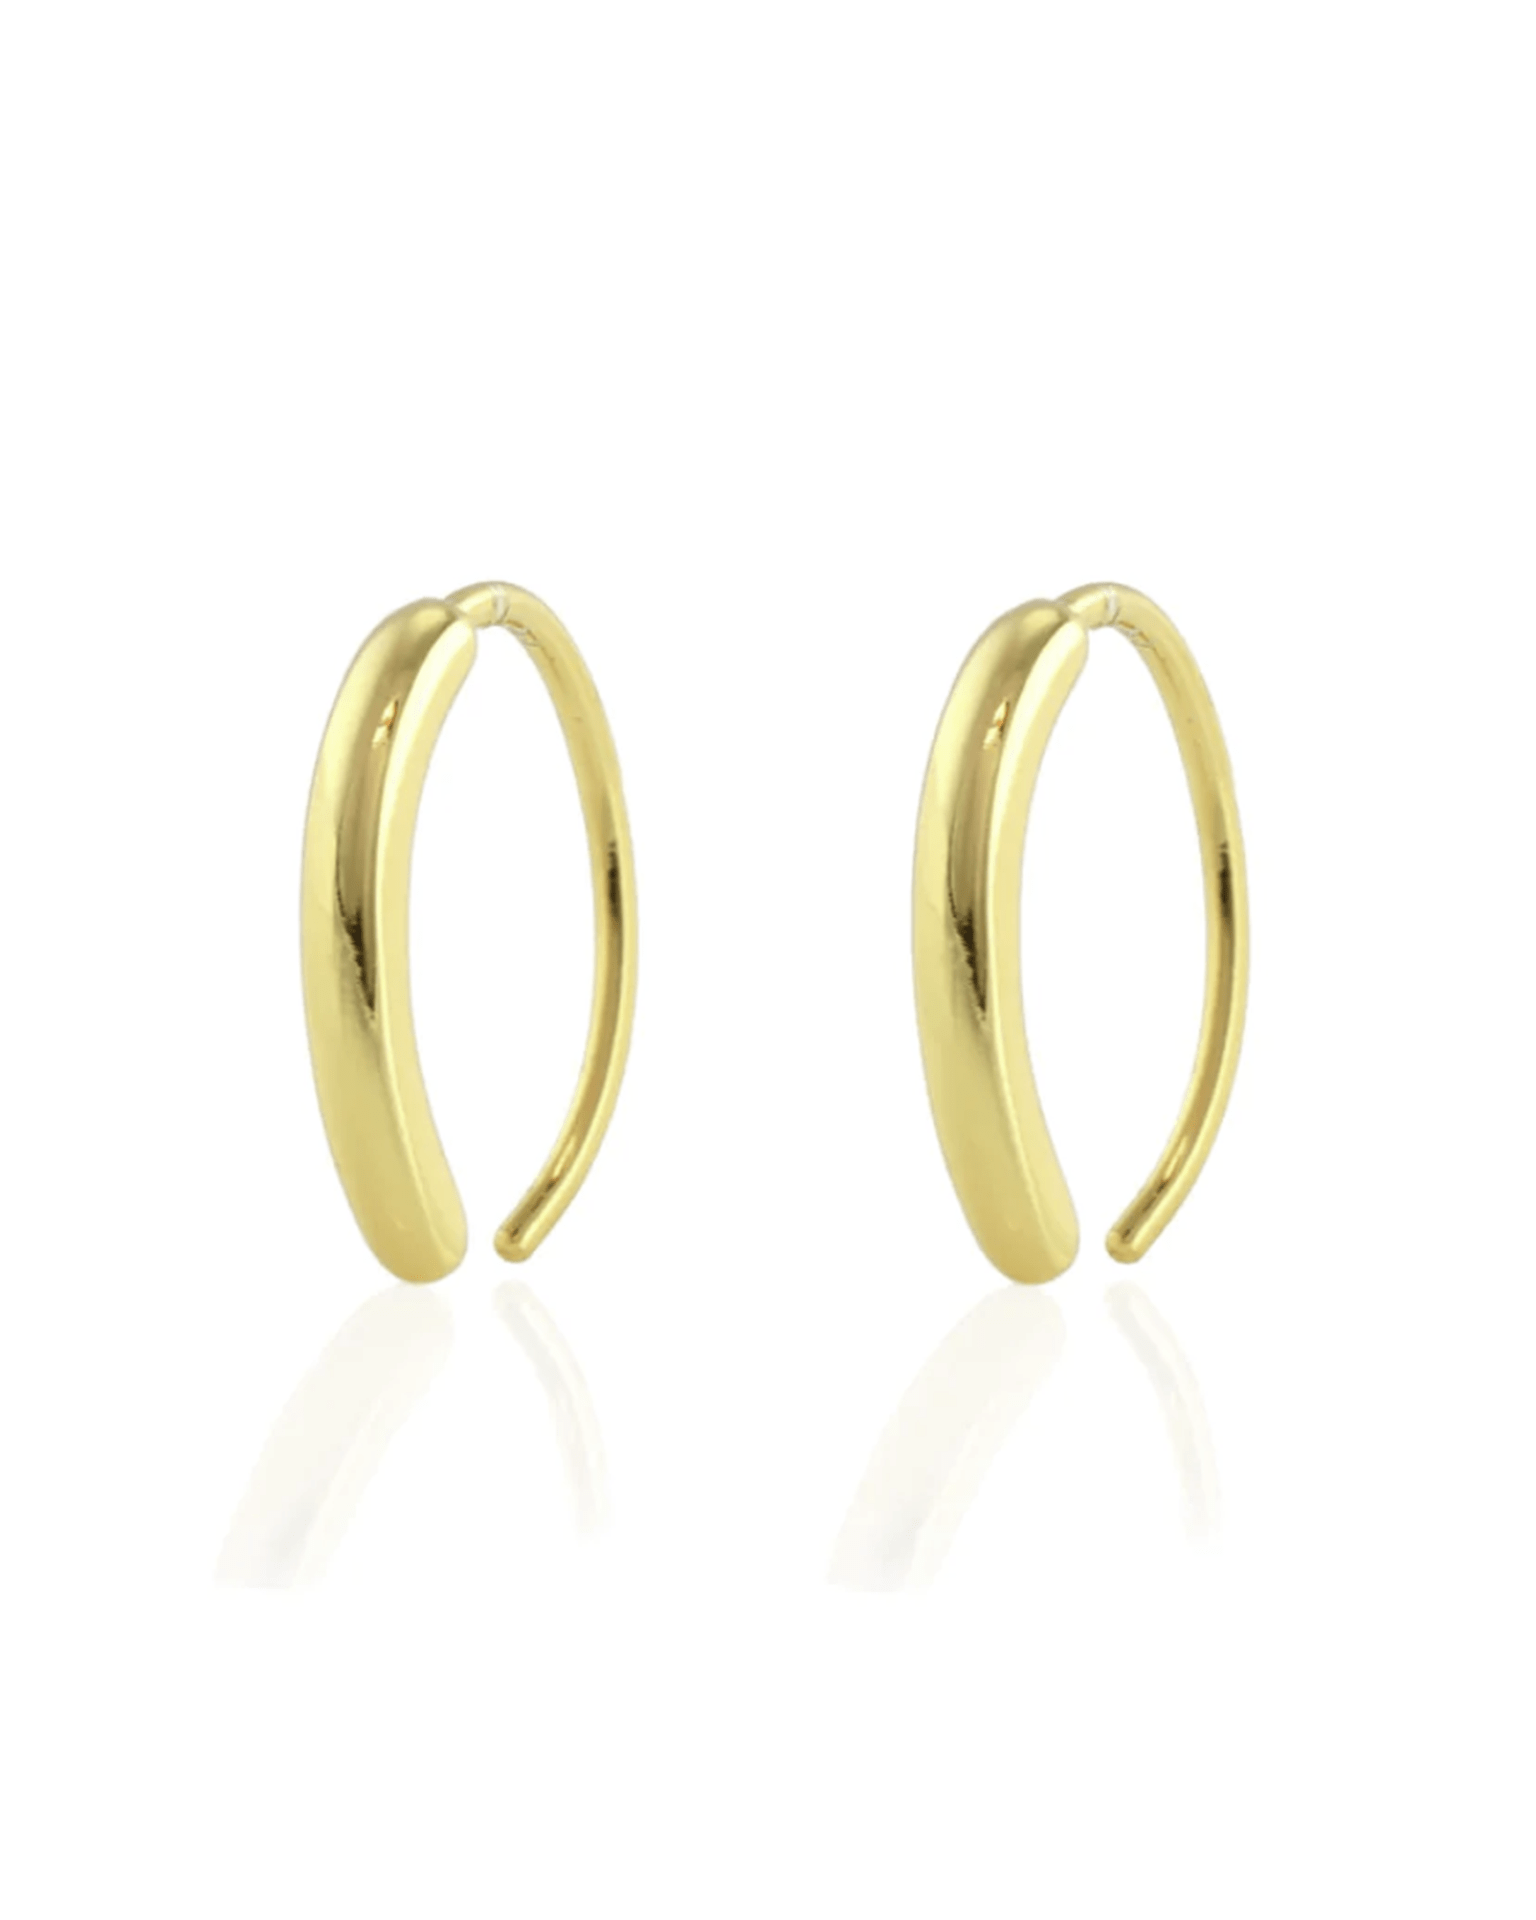 14KT Gold Earrings - Hoop Earrings - Round Earrings - Earrings - Lulus